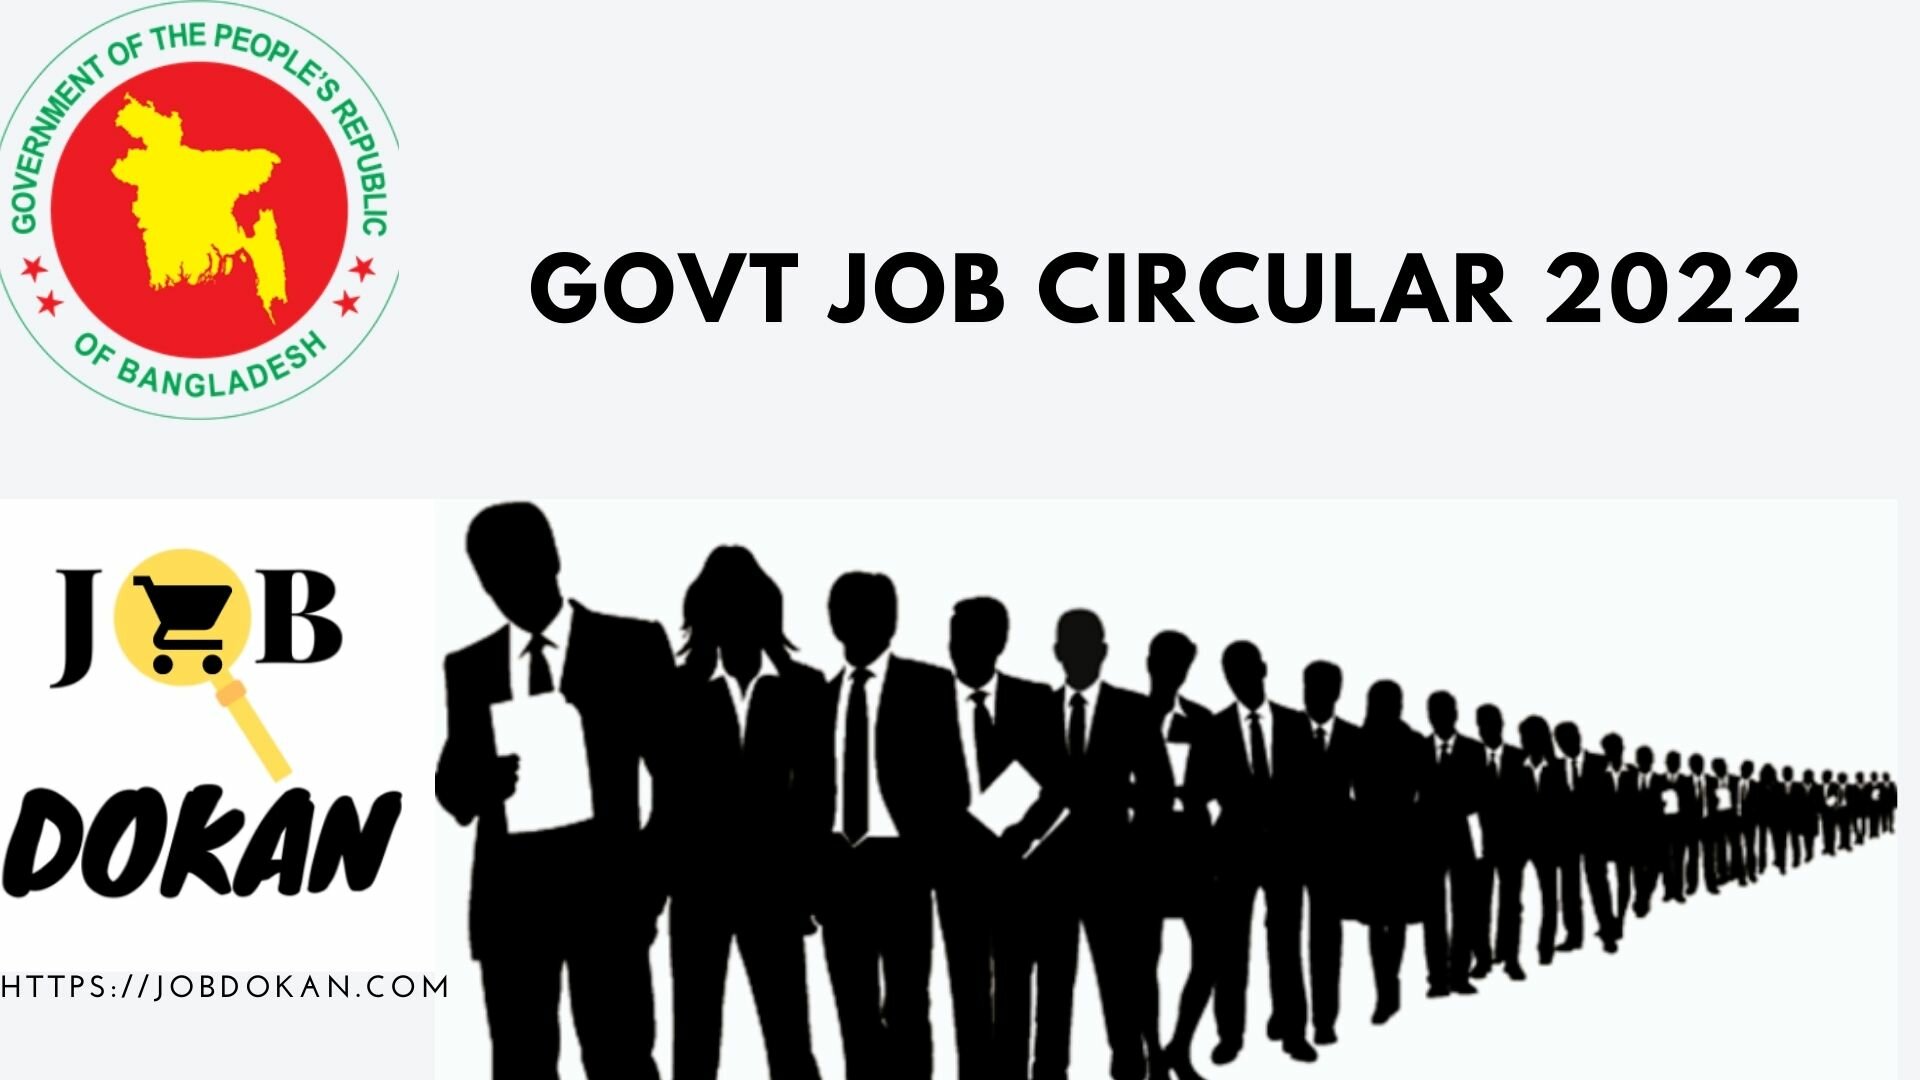 Govt job circular 2022